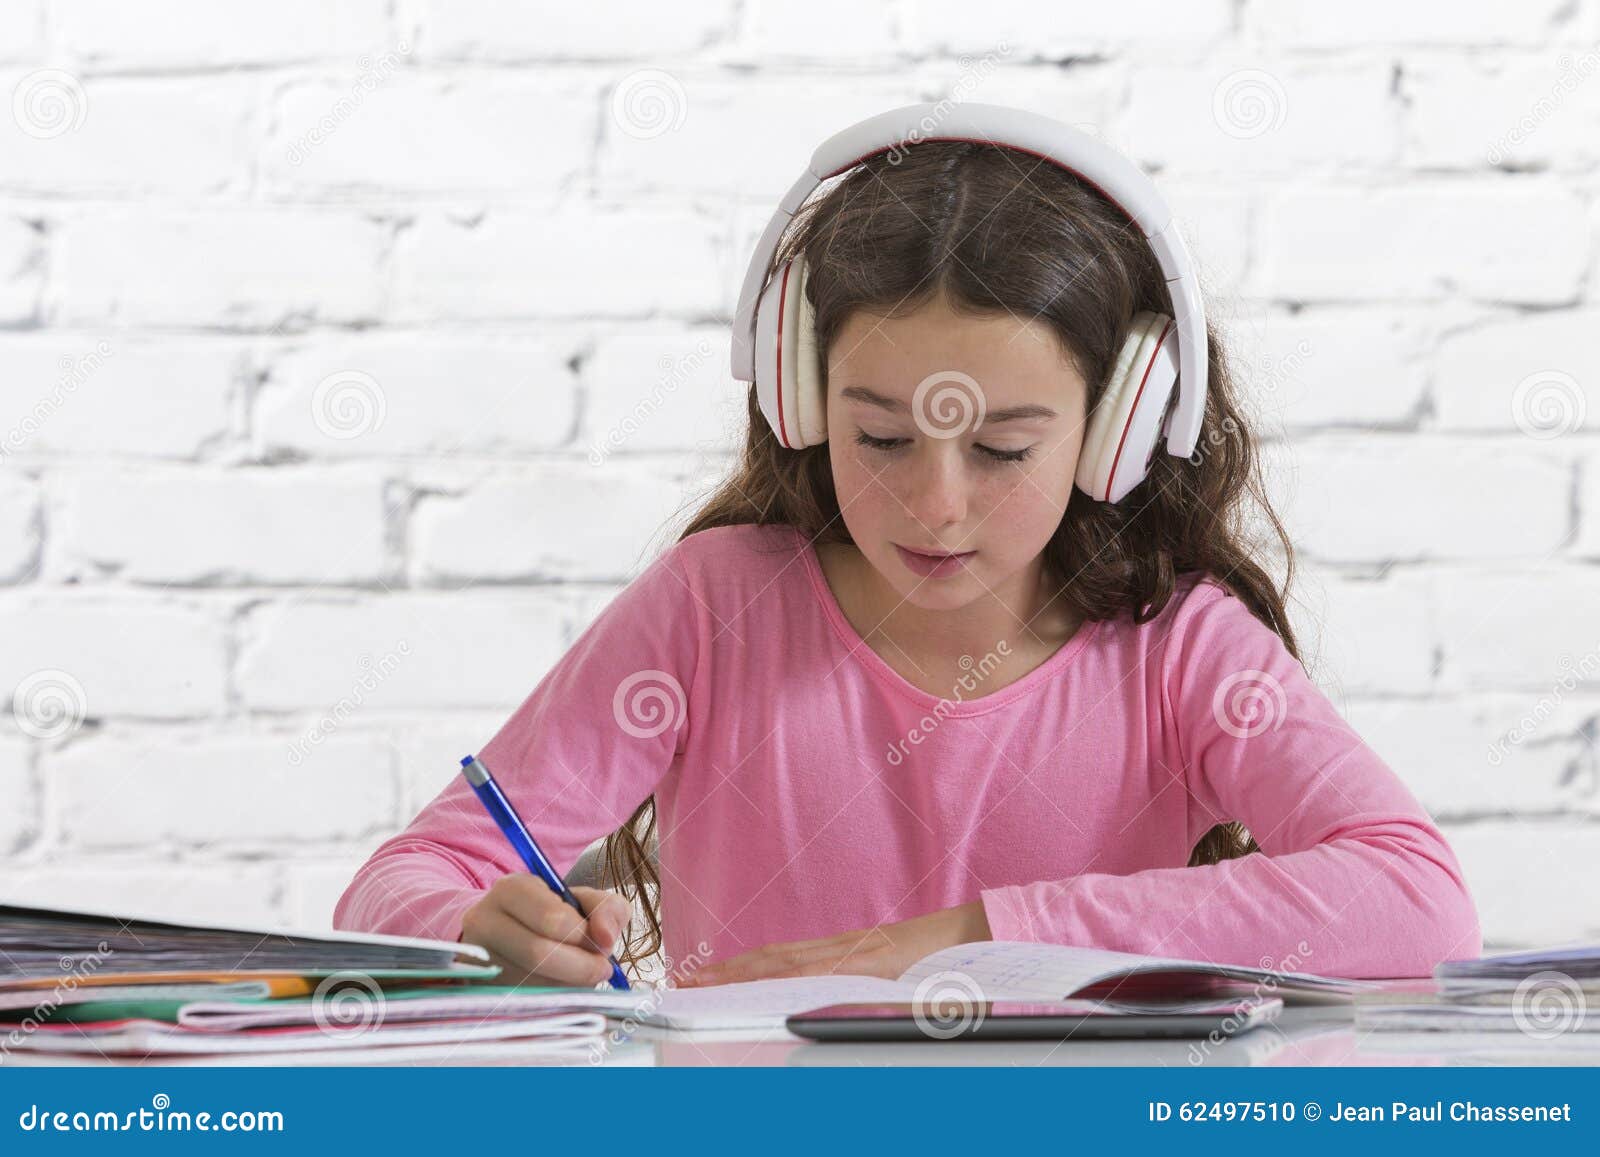 listening to music doing homework